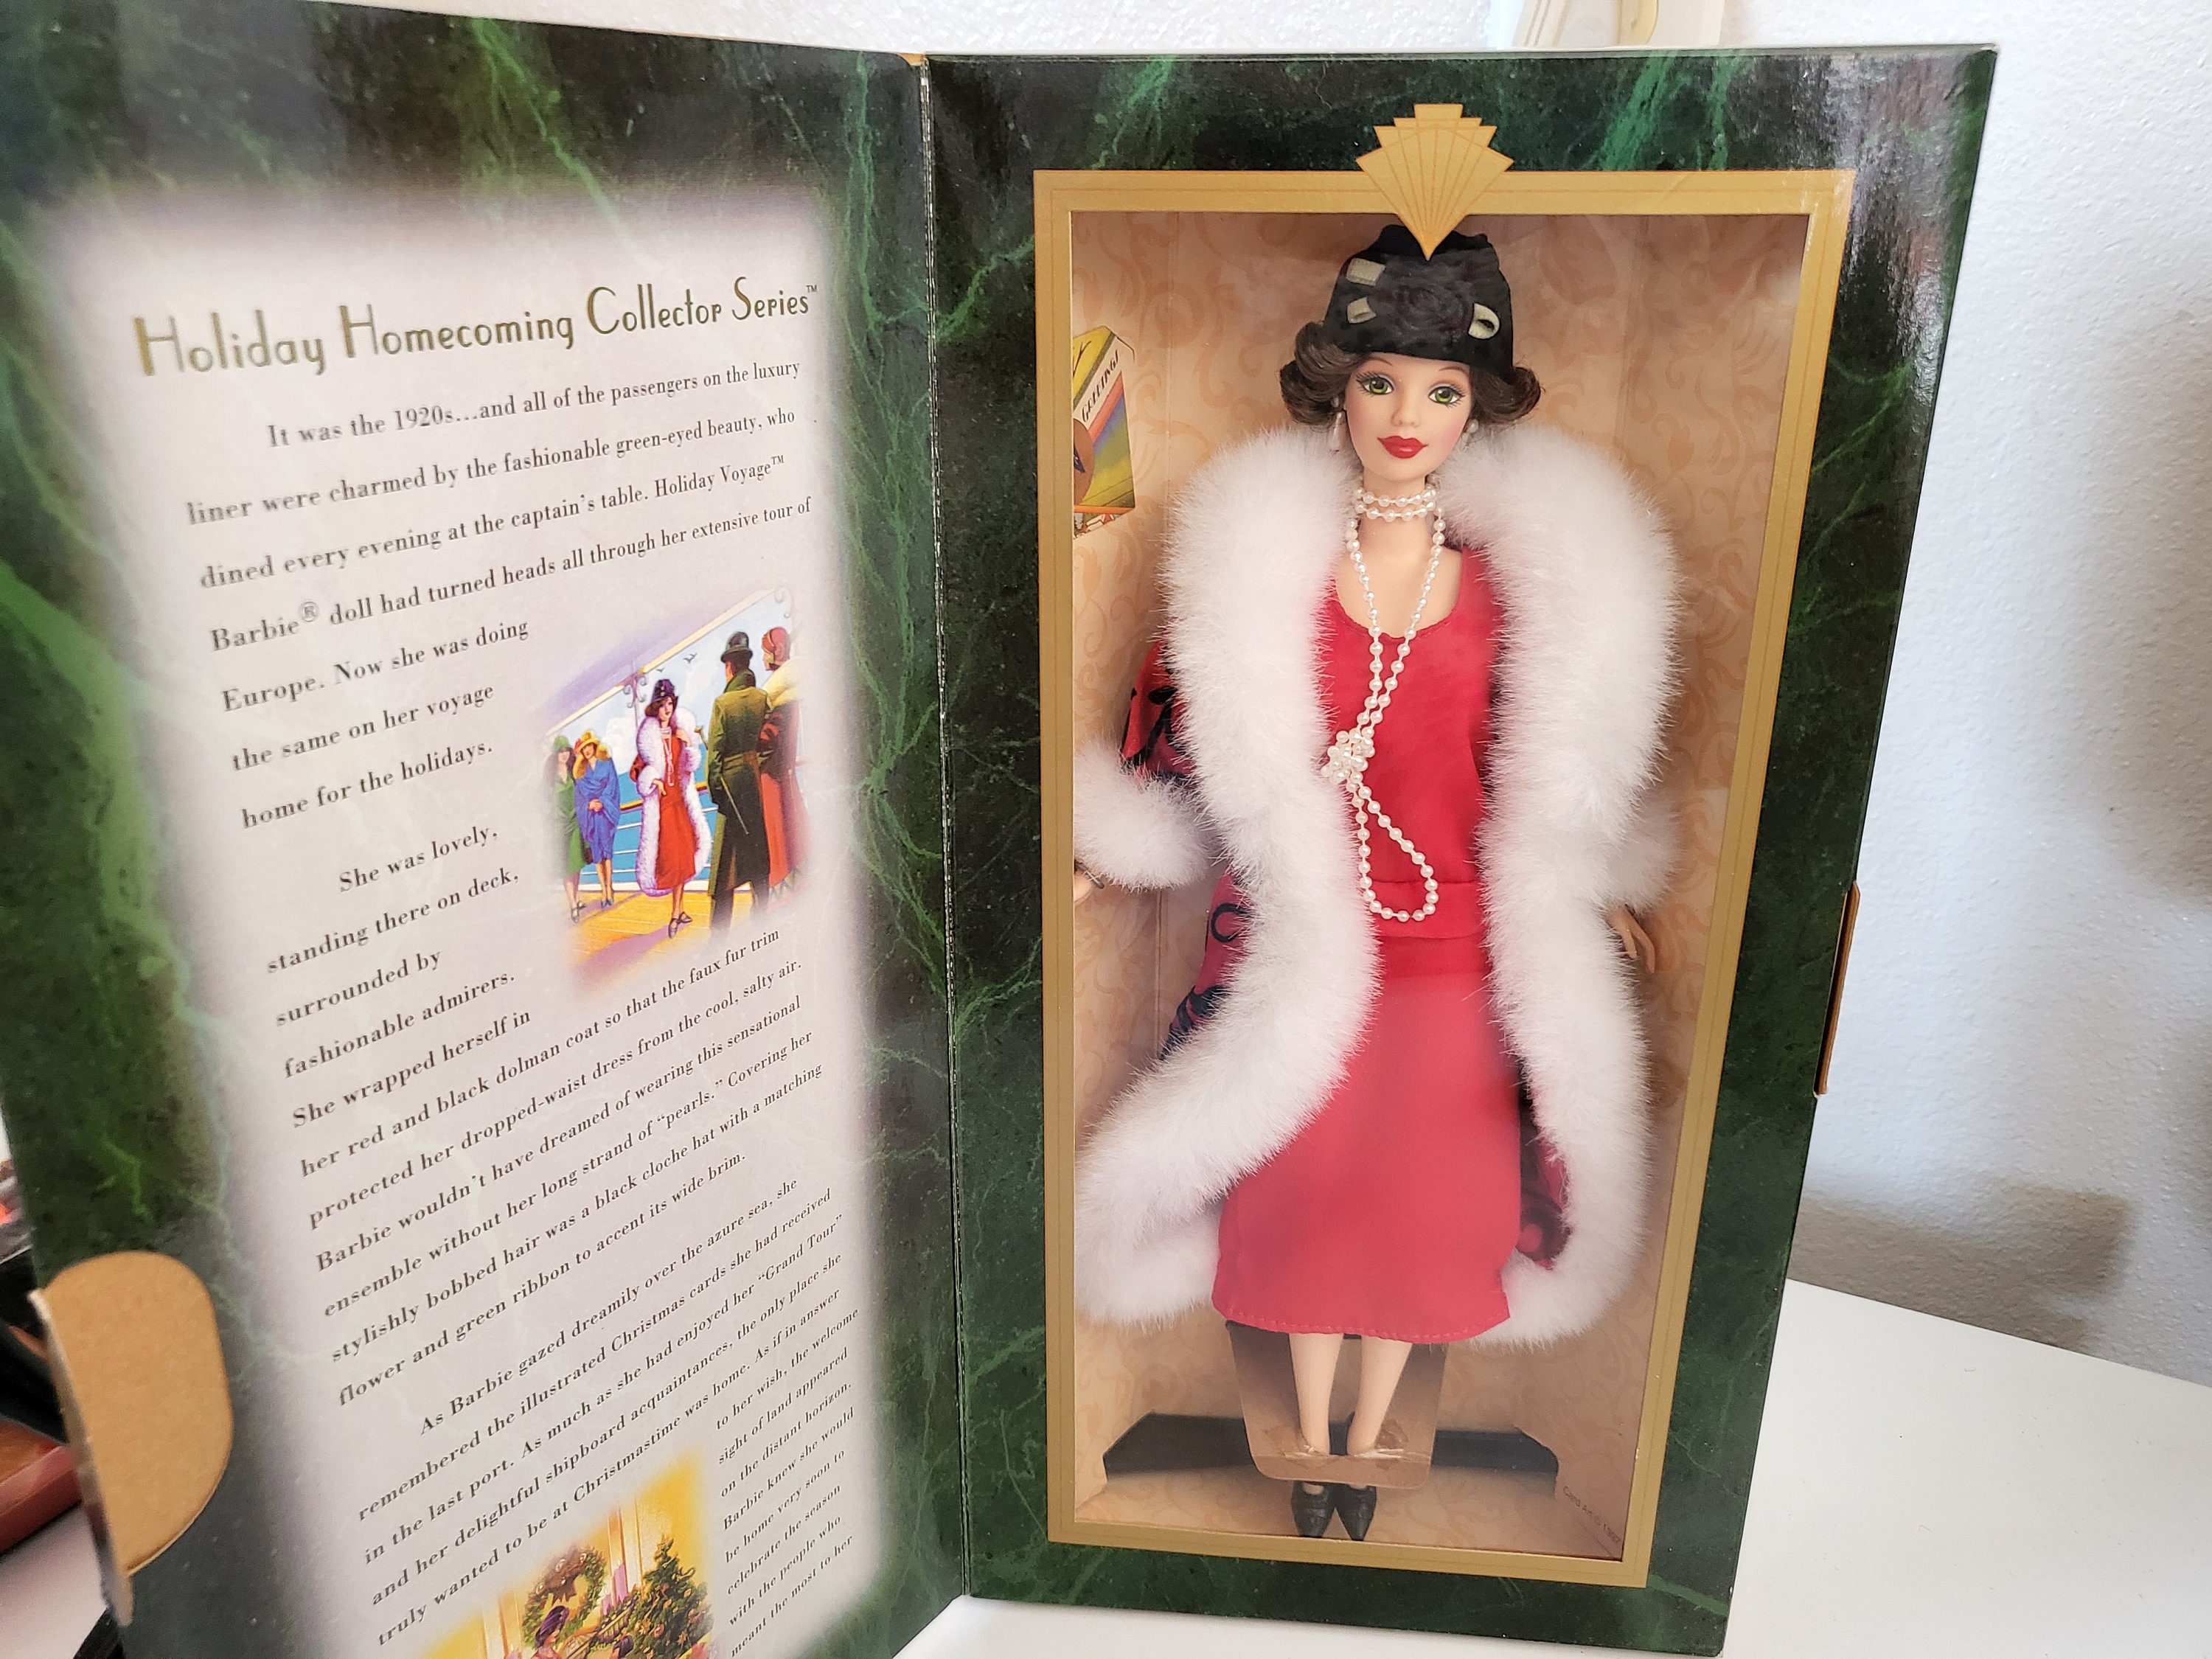 Barbie Voyage Holiday Homecoming Collector Series Hallmark 1997